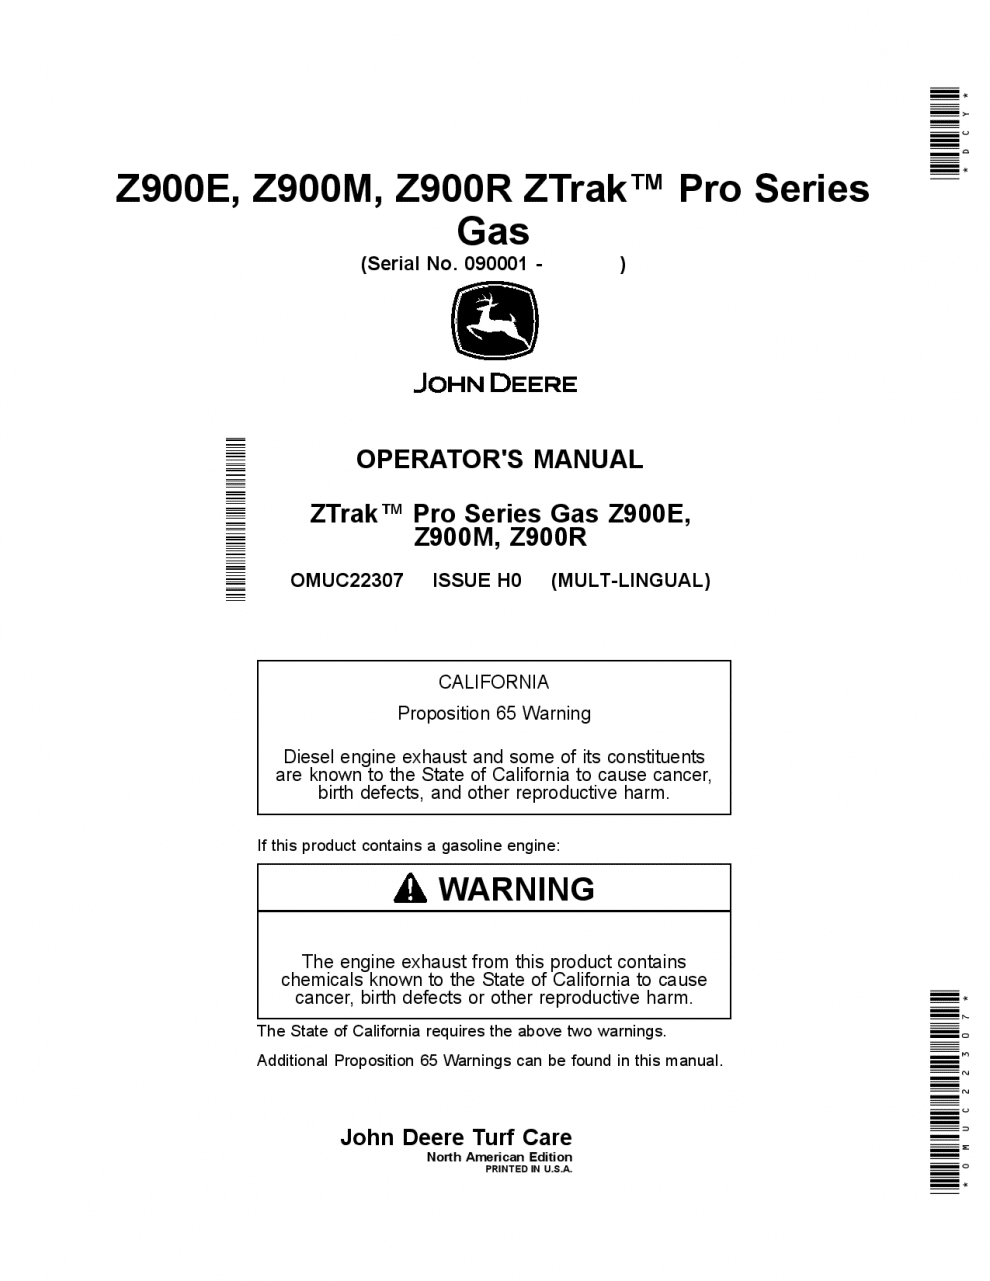 John Deere Z930M Ztrak Parts Catalog Manual Pdf Download Service